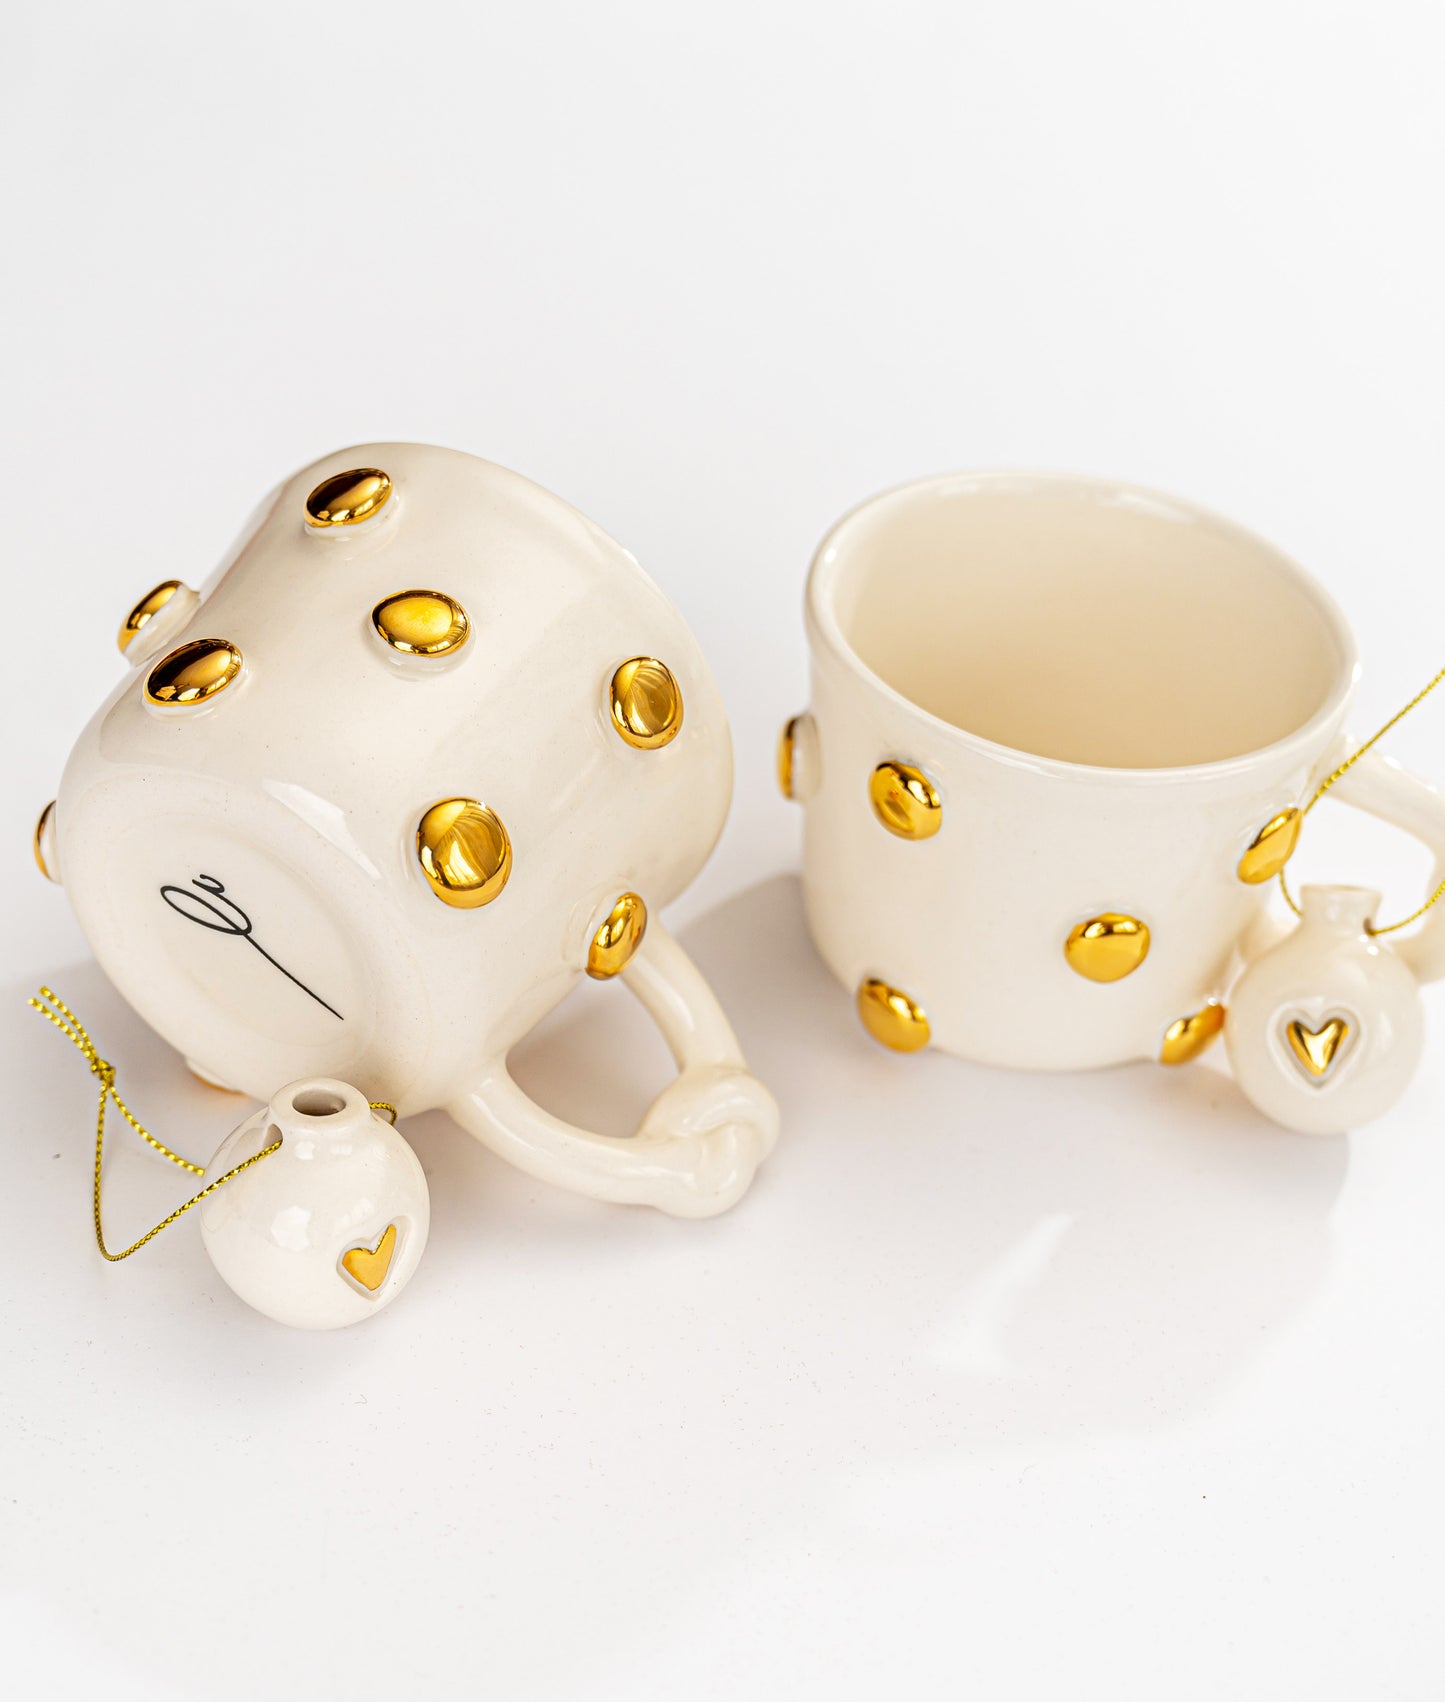 Porcelain 4 pieces gift set WHITE & GOLD - ZLATNAporcelain